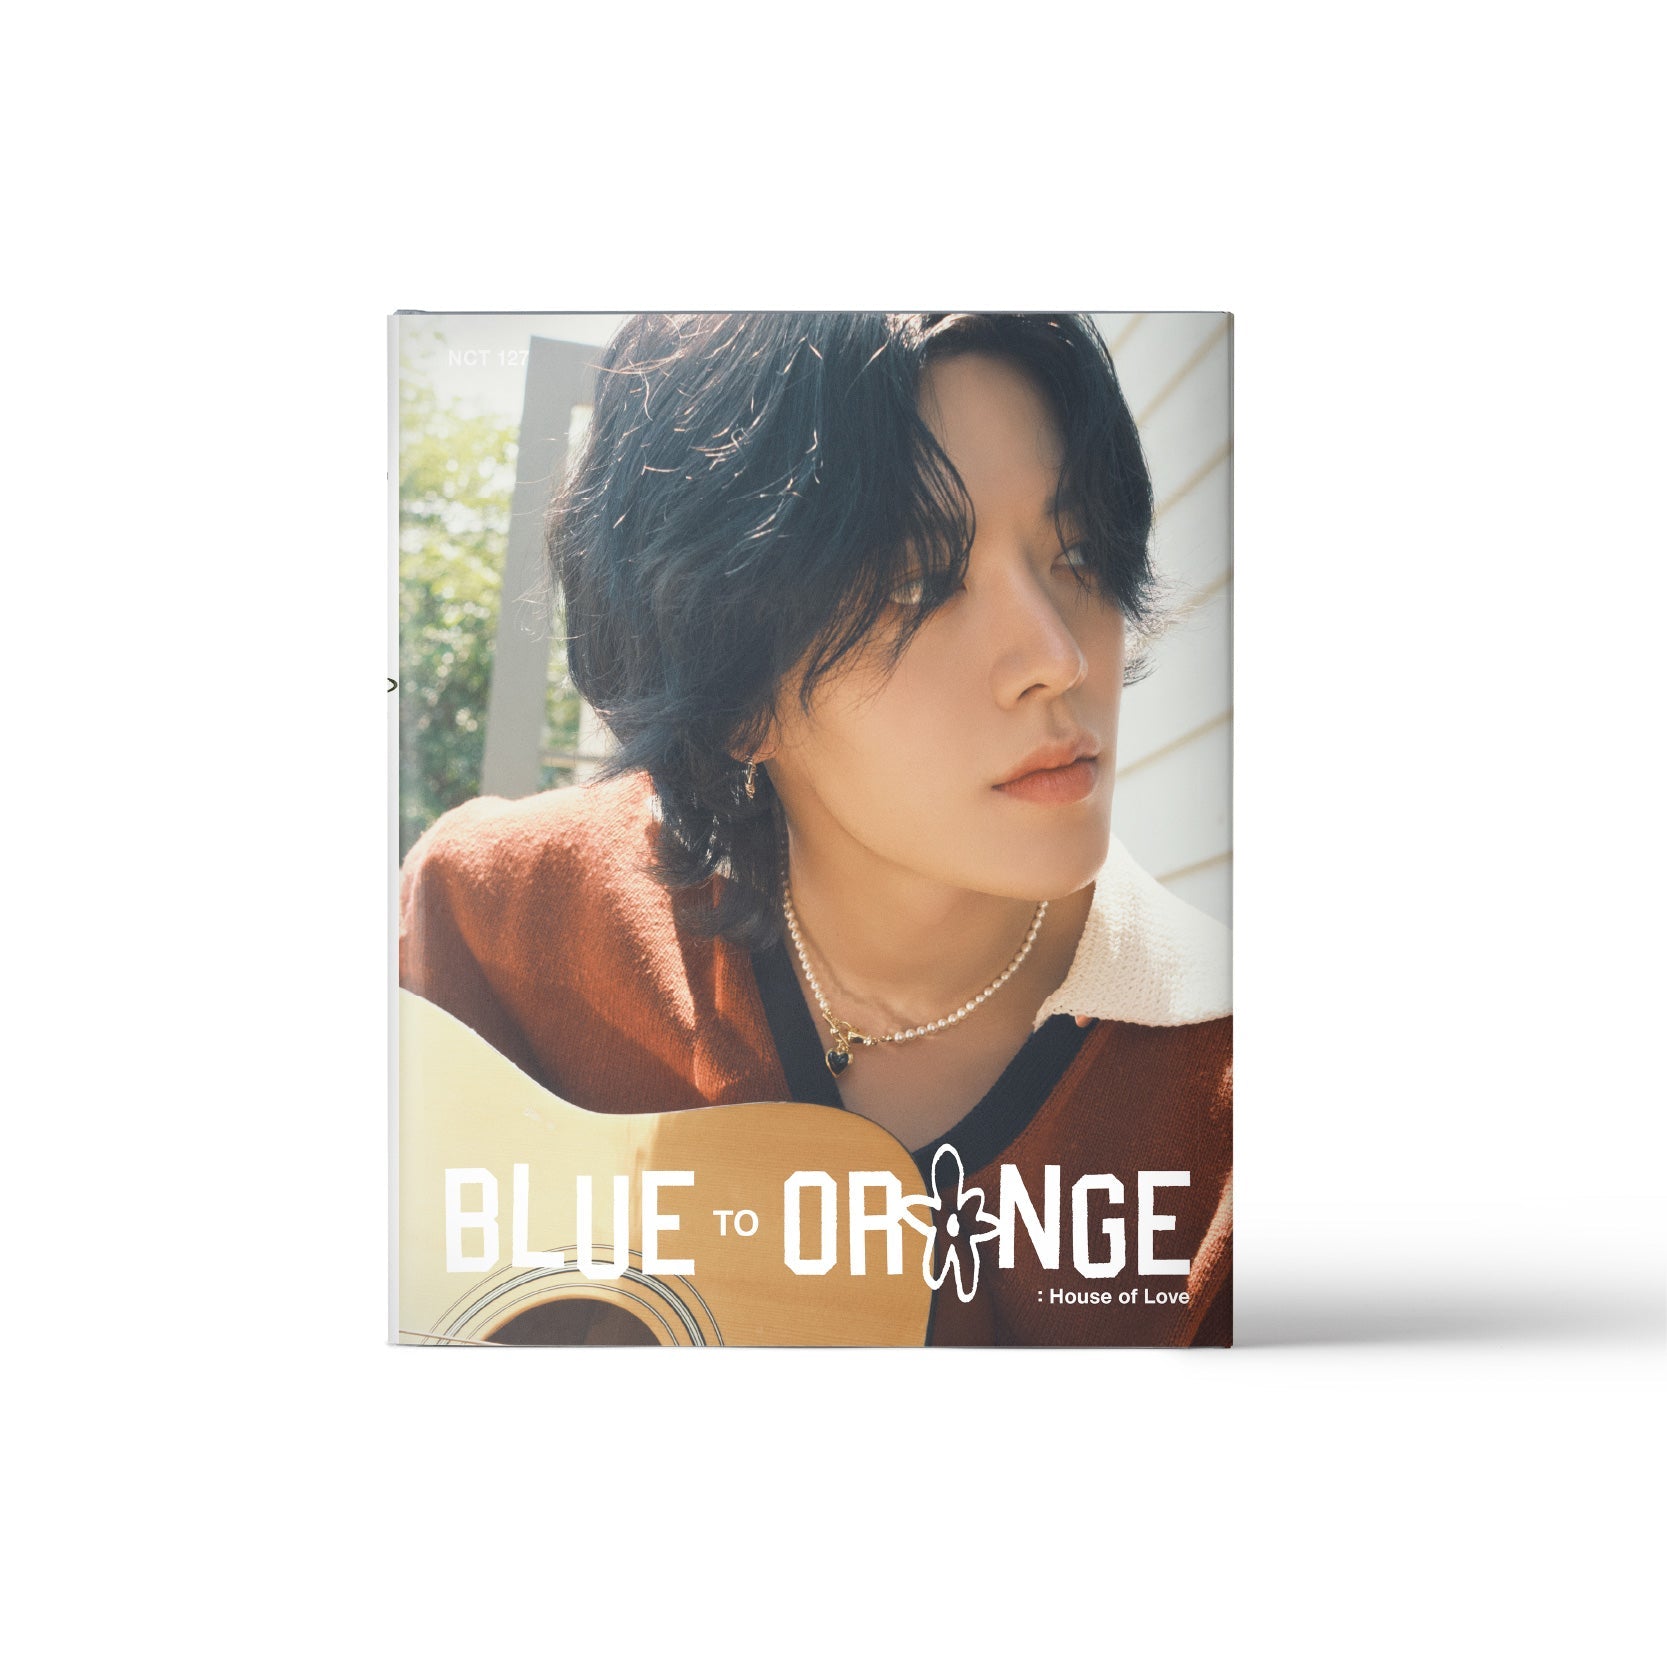 NCT 127 PHOTOBOOK 'BLUE TO ORANGE : HOUSE OF LOVE' YUTA VERSION COVER